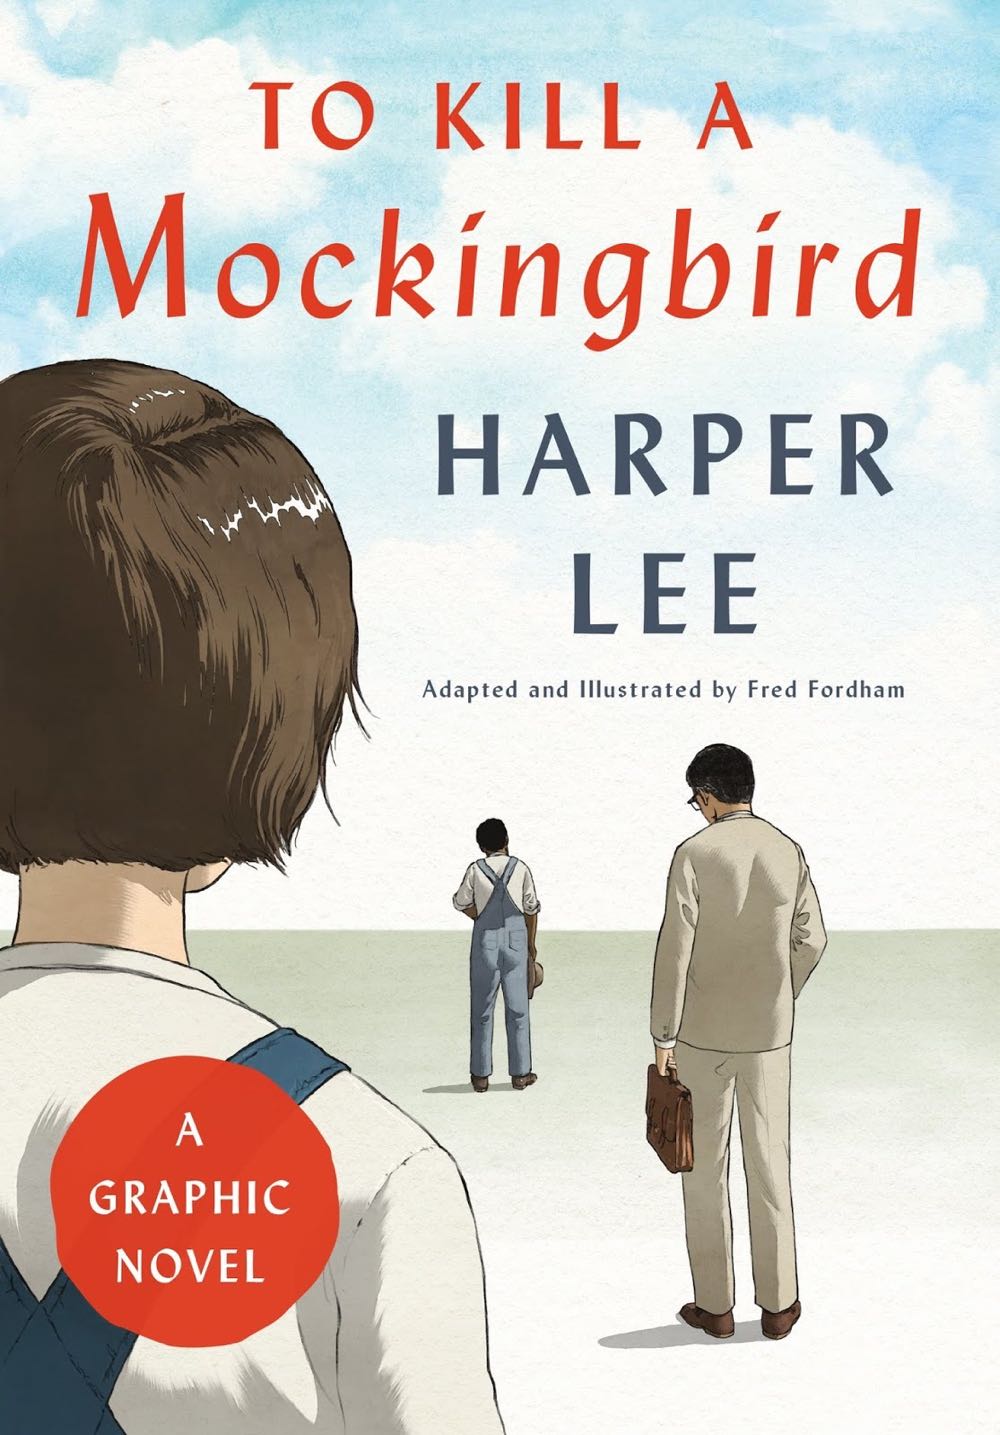 To Kill a Mockingbird: A Graphic Novel - Harper Lee (Harper - Hardcover) book collectible [Barcode 9780062798183] - Main Image 1